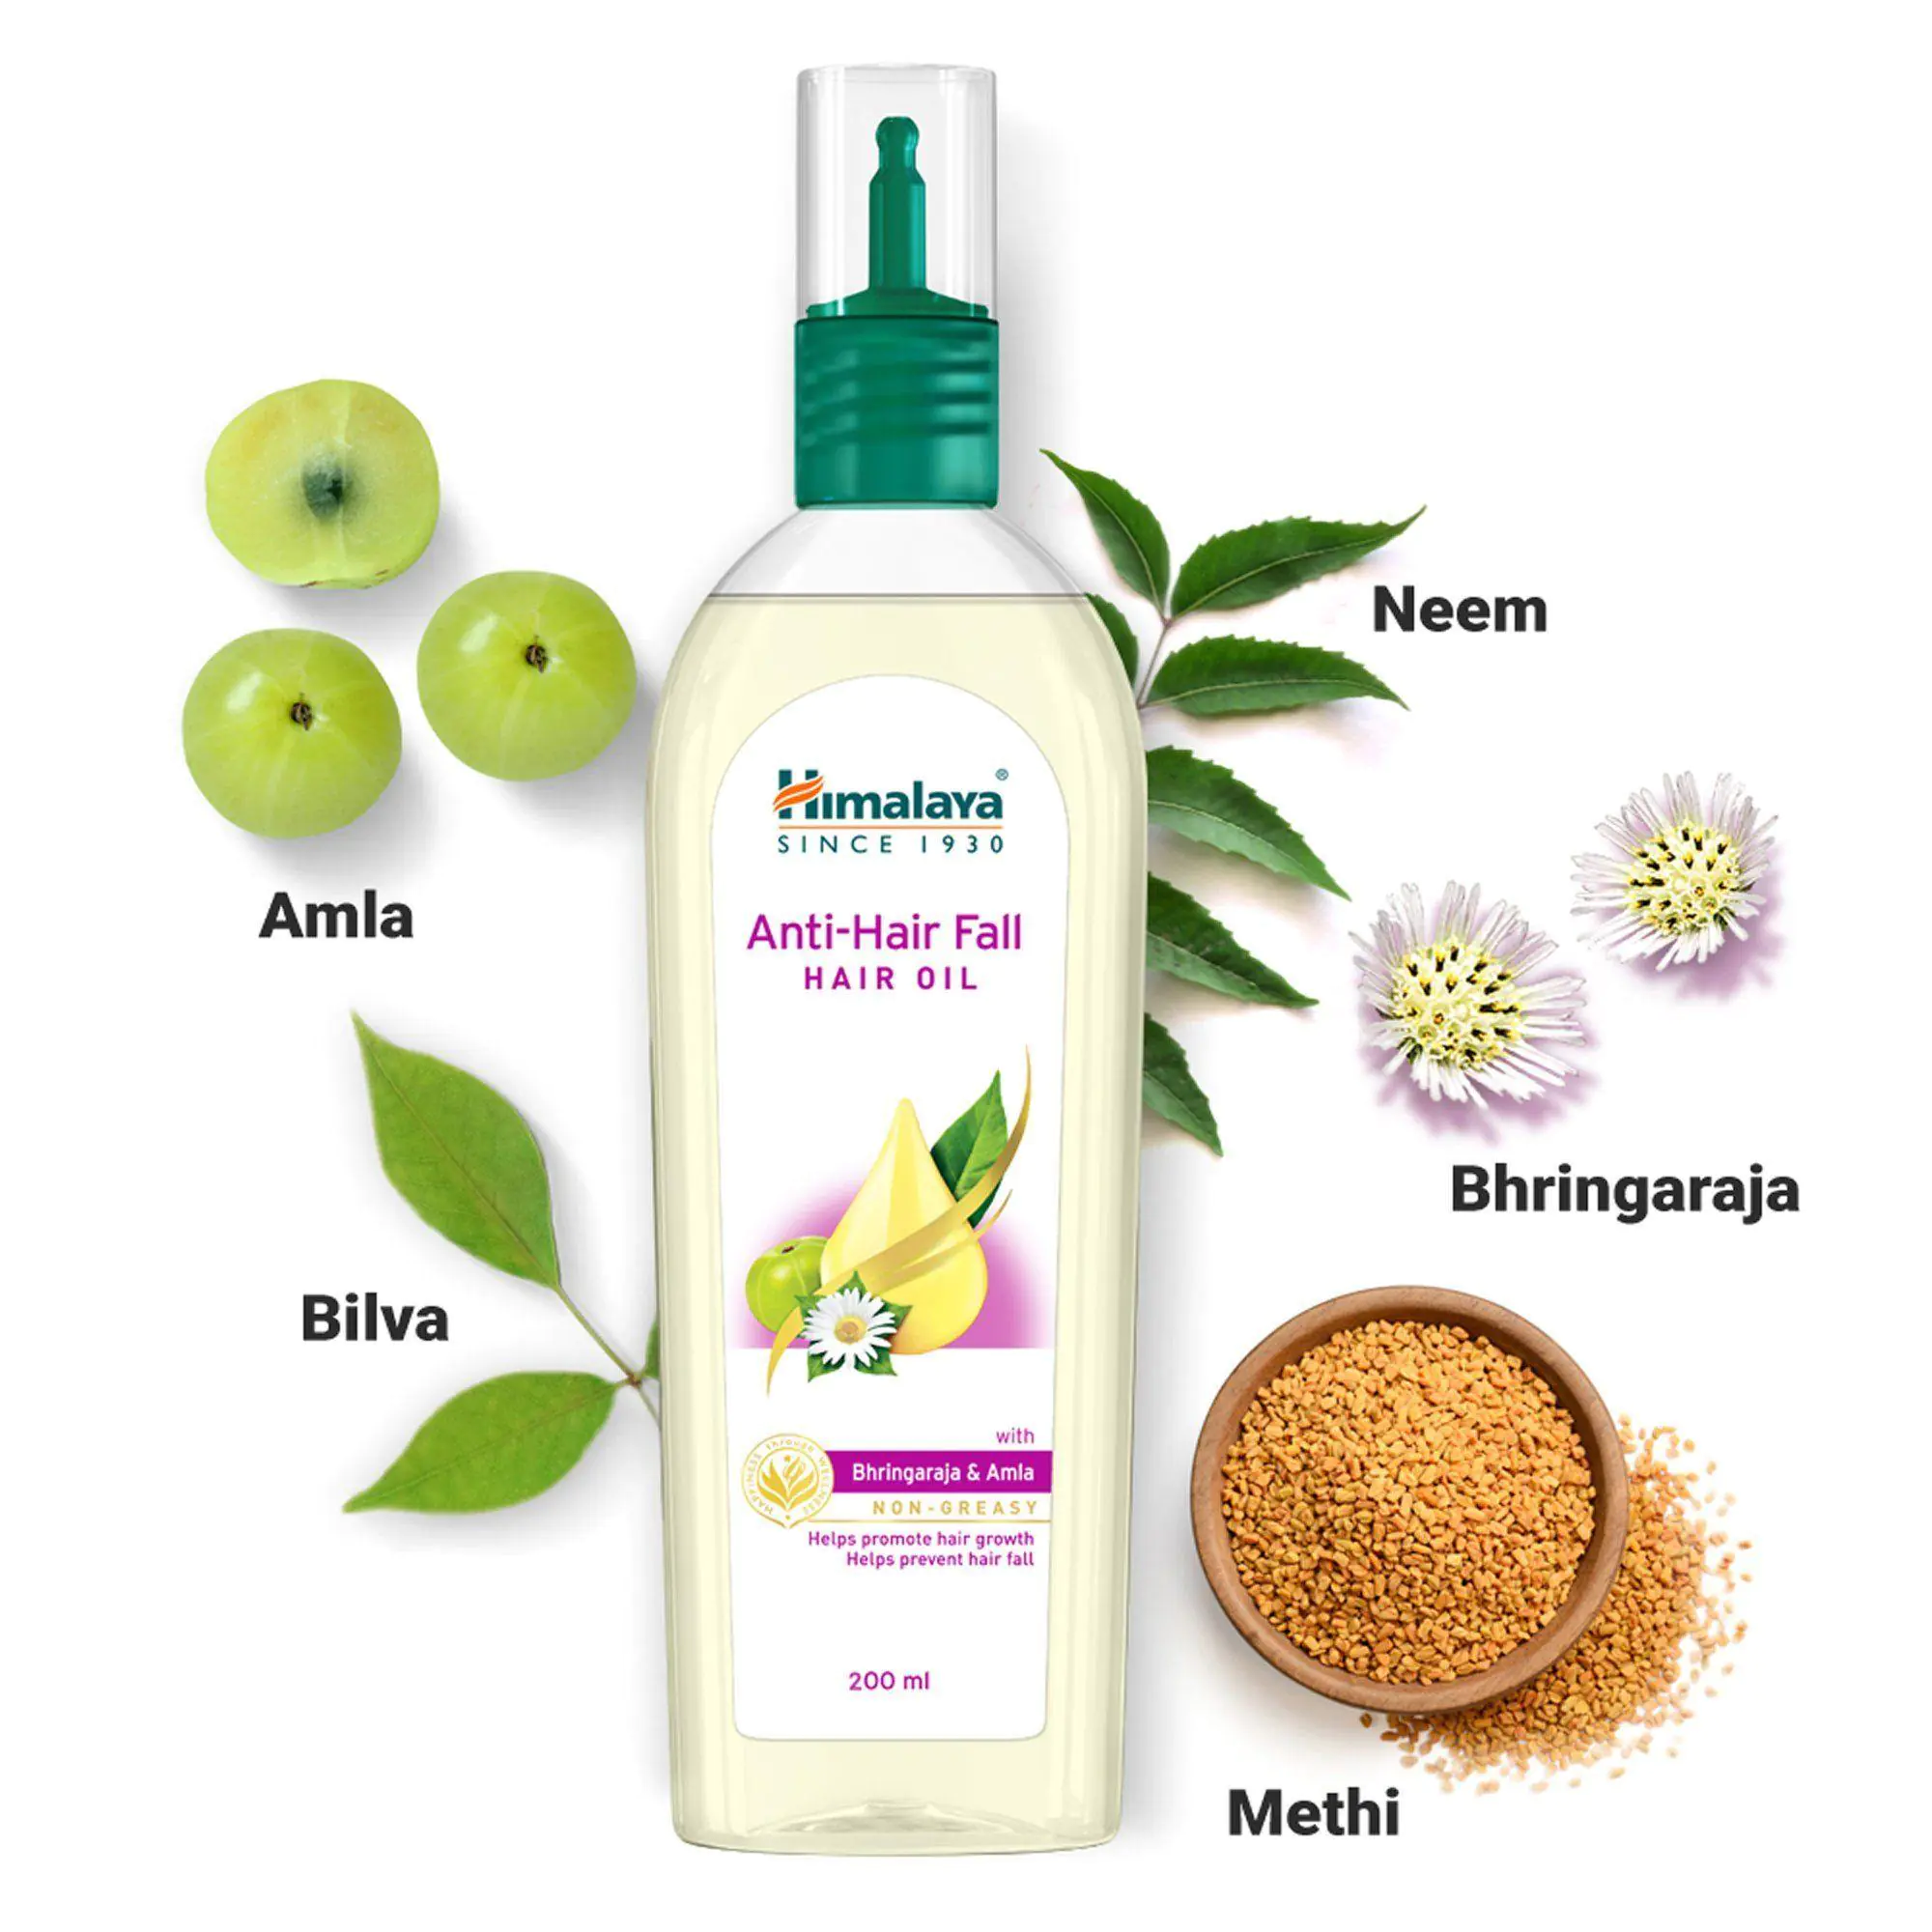 Himalaya Herbals Anti-Hair Fall Hair Oil